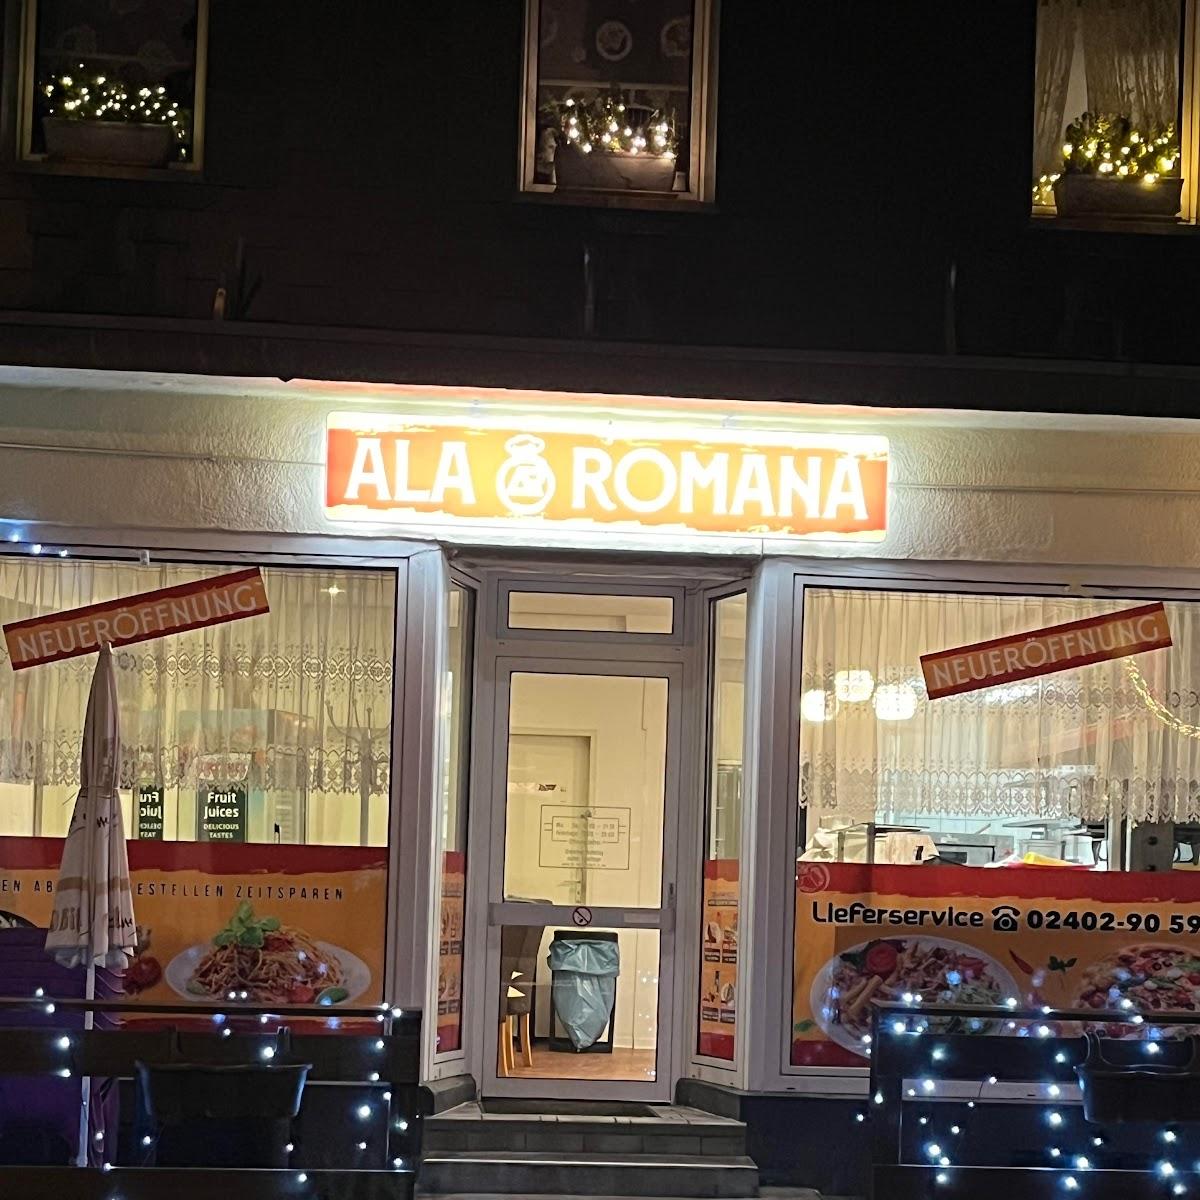 Restaurant "Ala Romana" in Stolberg